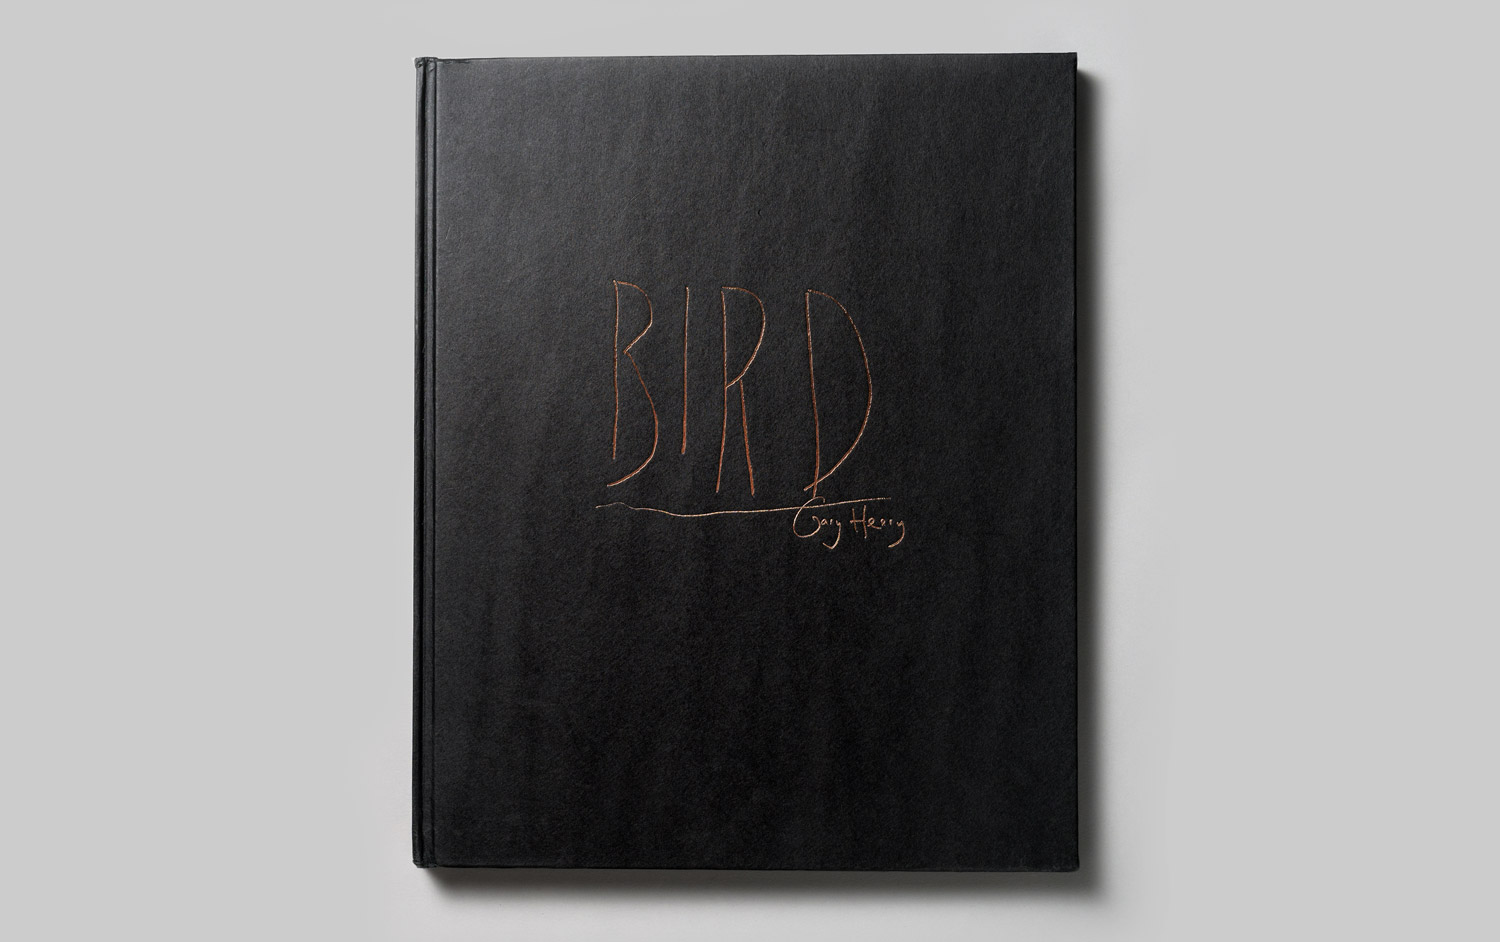 Gary-Heery-Bird-Front-Cover.jpg